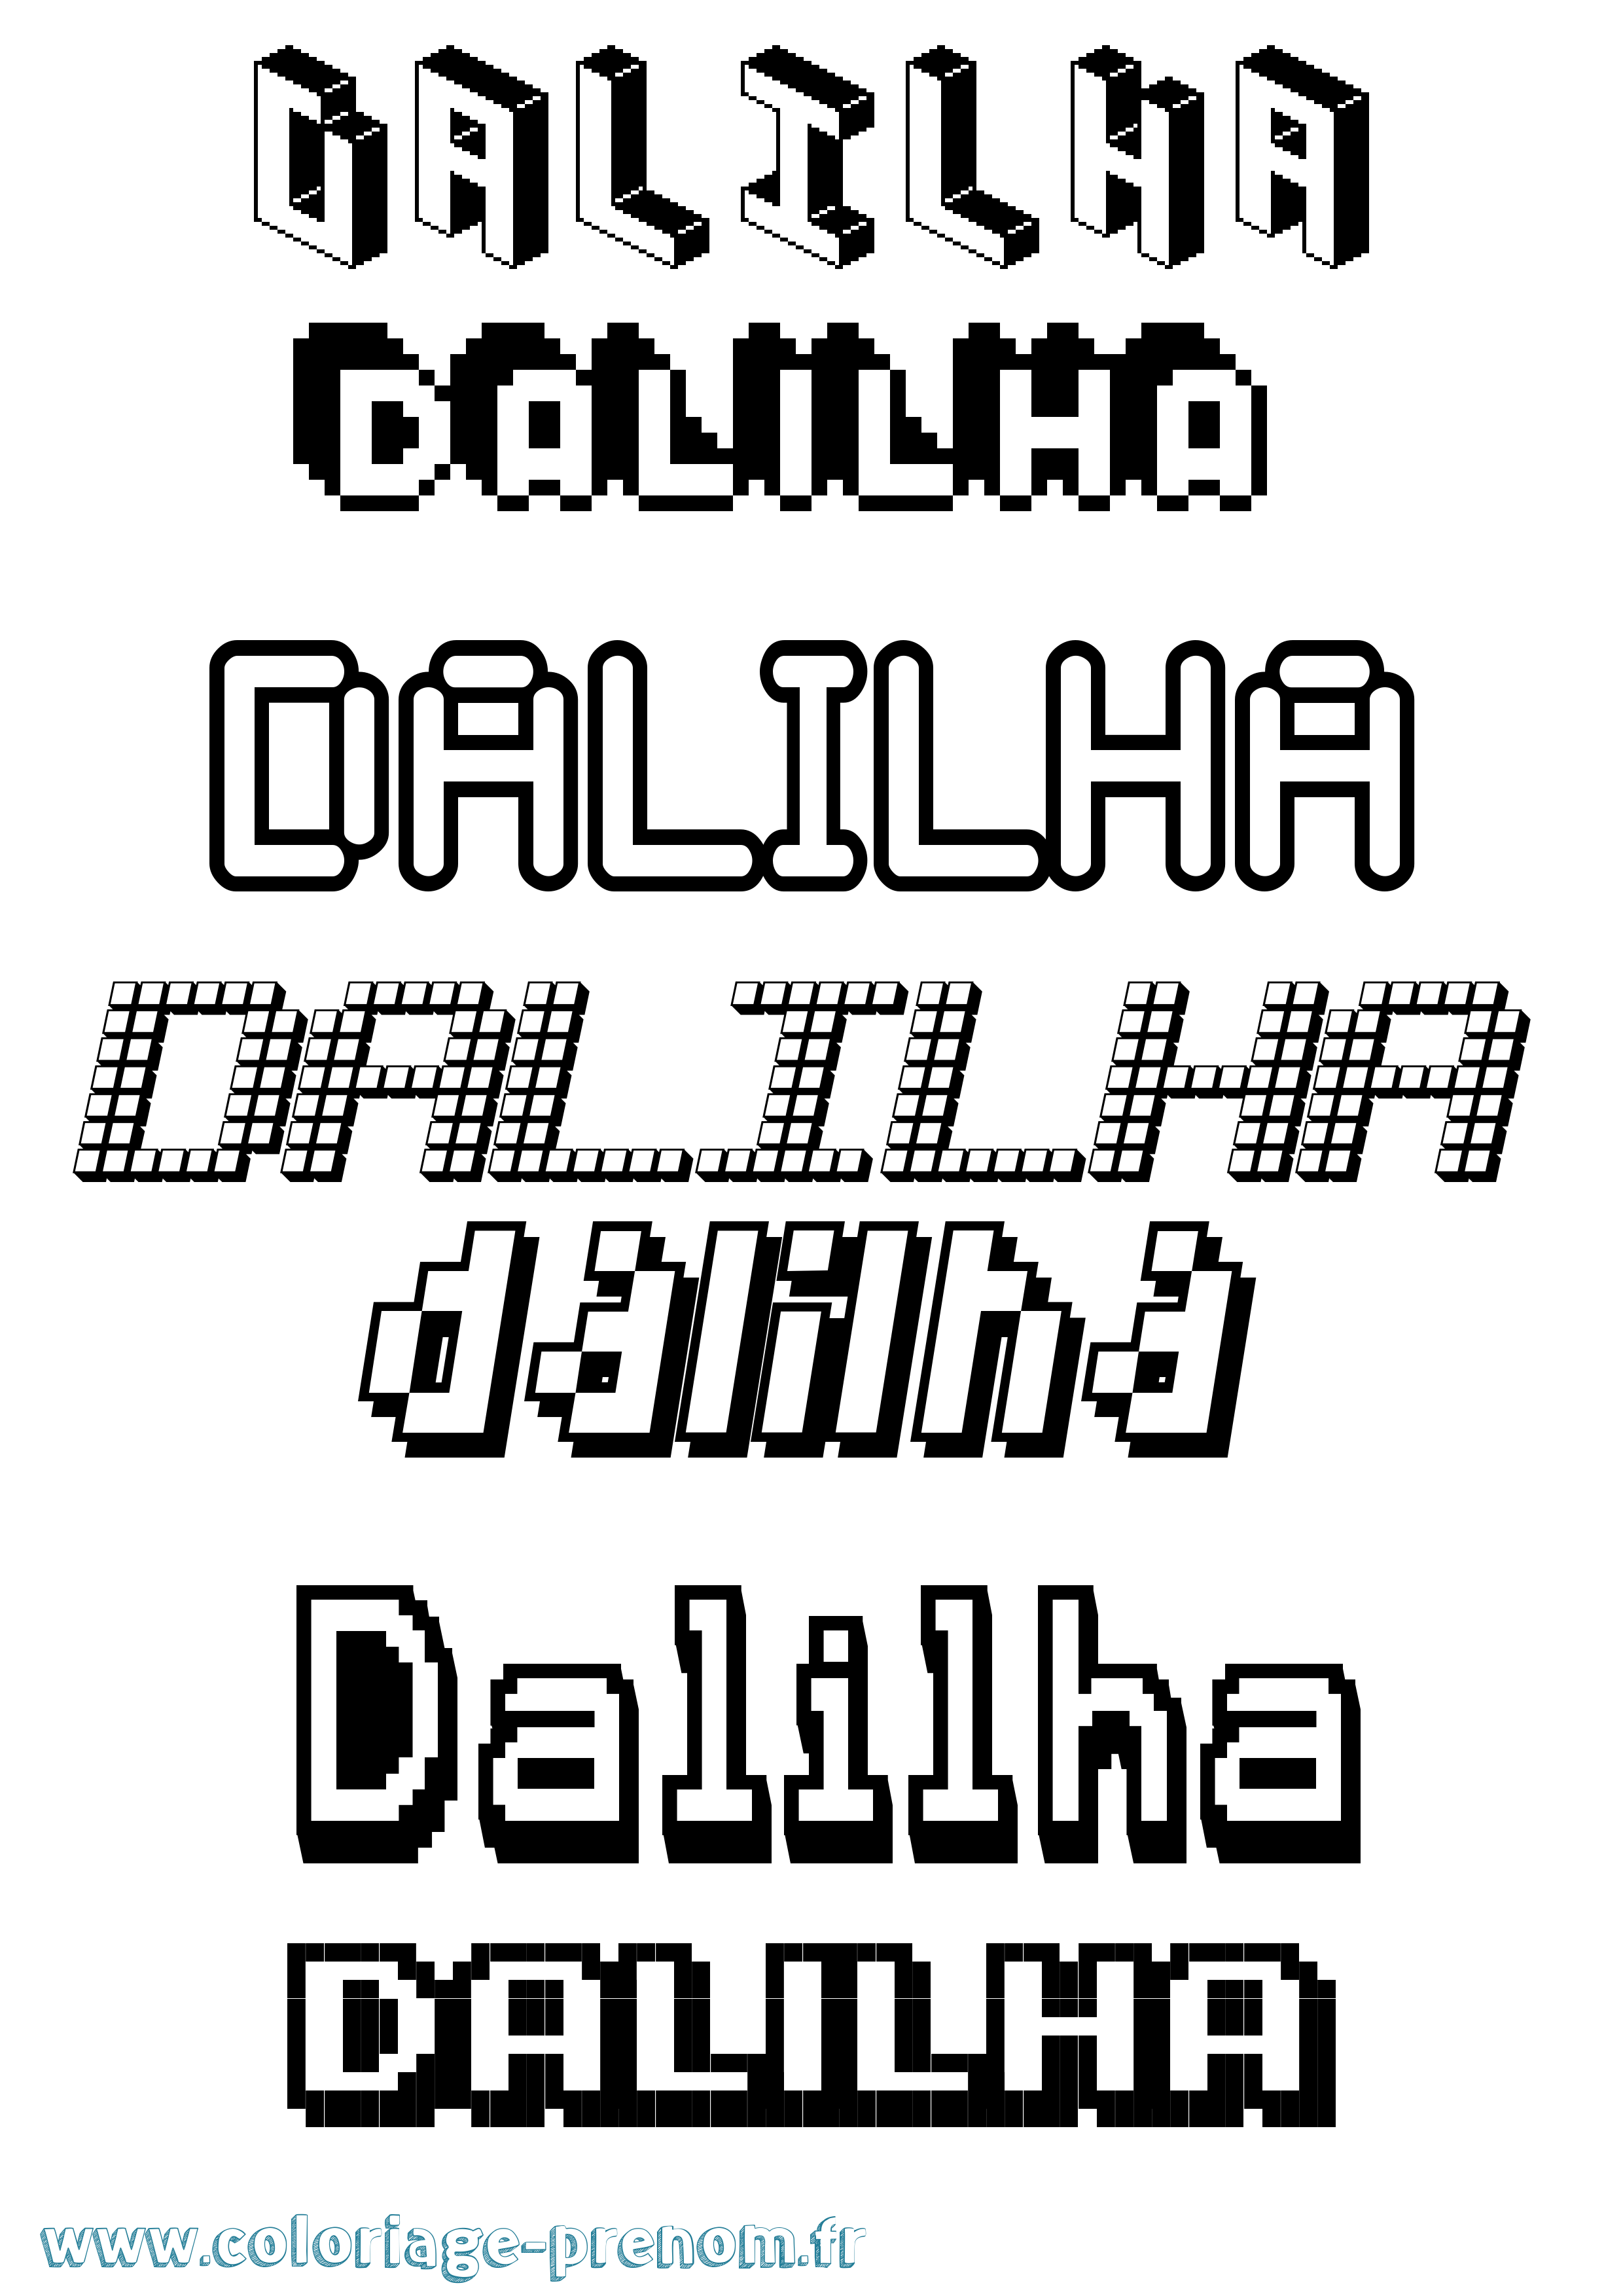 Coloriage prénom Dalilha Pixel